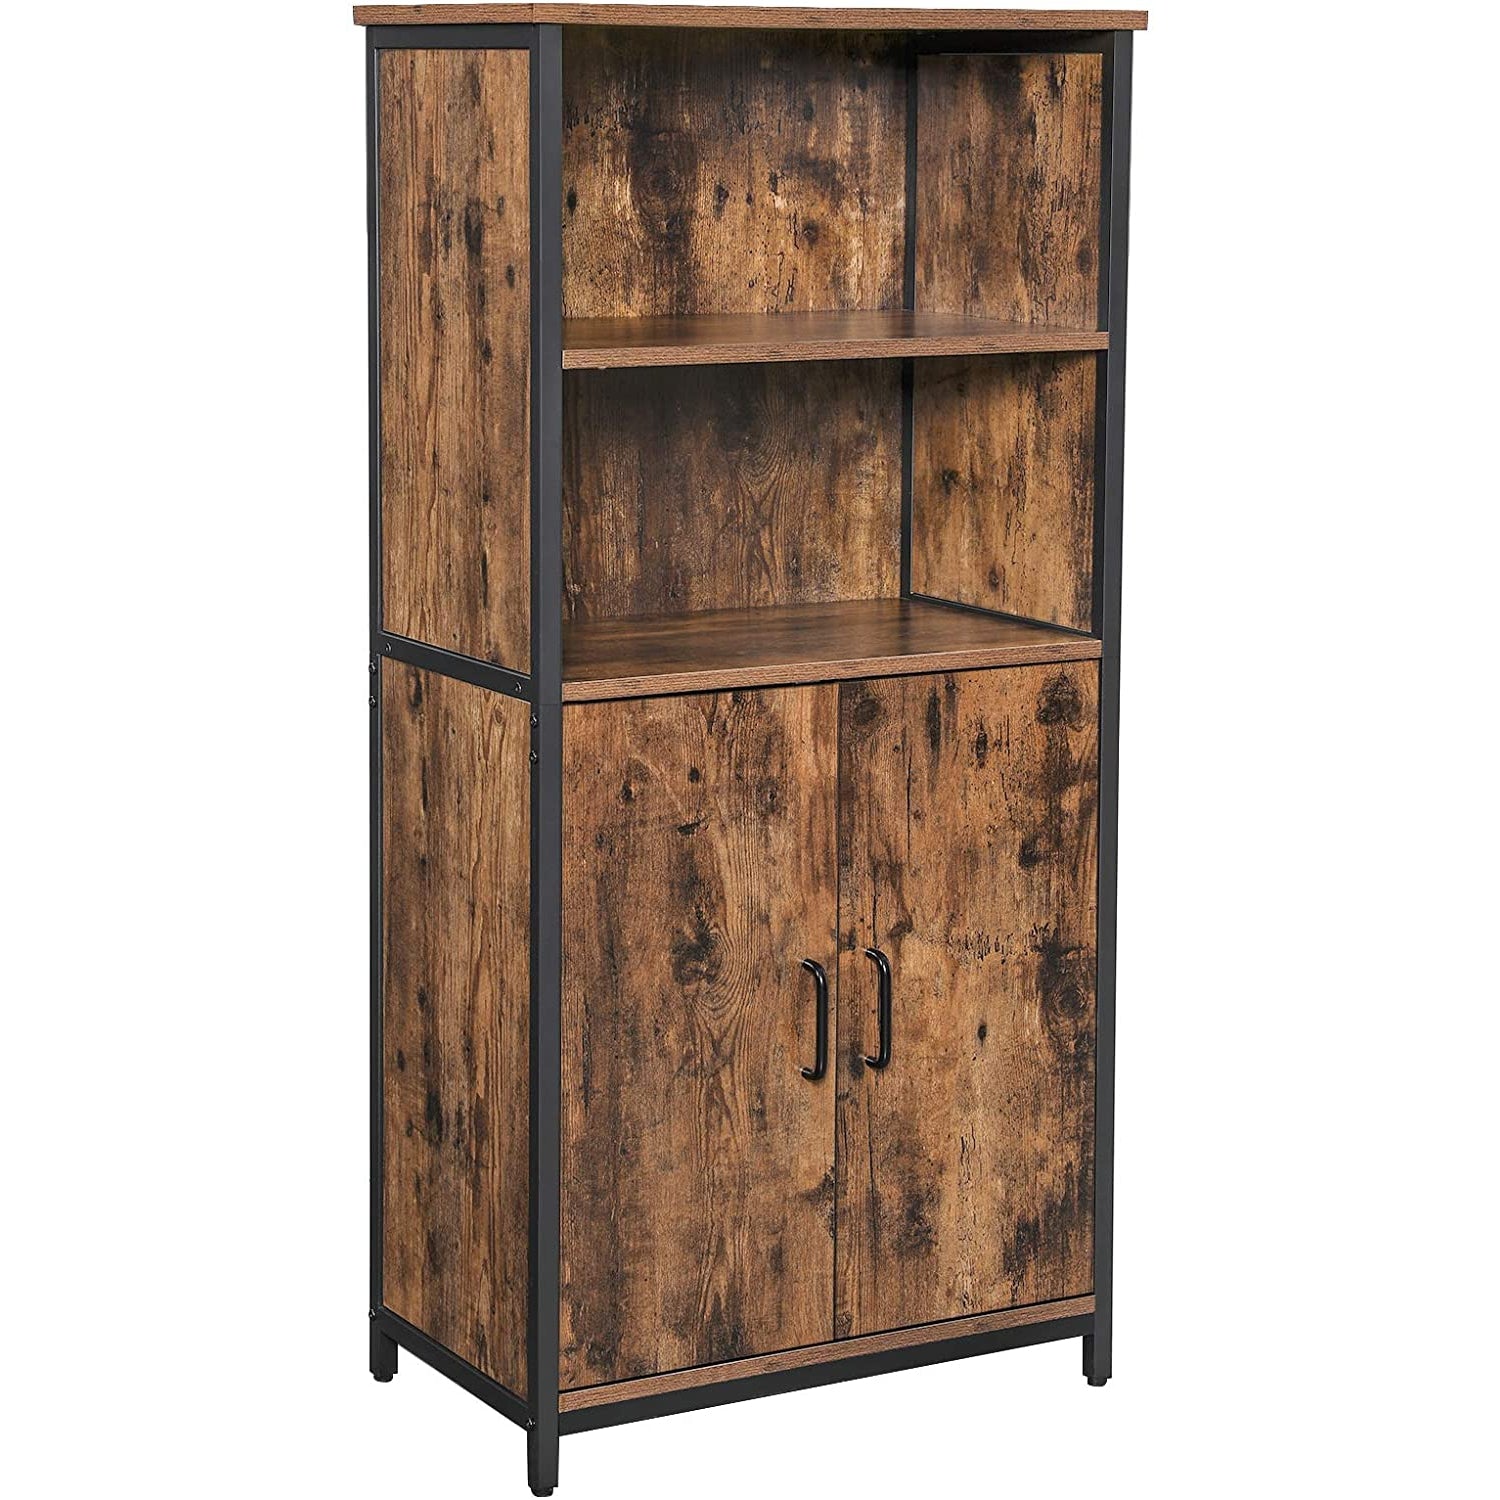 Nancy's Hutchinson Bookcase - Vintage Wooden Cabinet - Industrial Cabinets - 2 Doors - 60 x 35 x 125 cm (L x W x H)